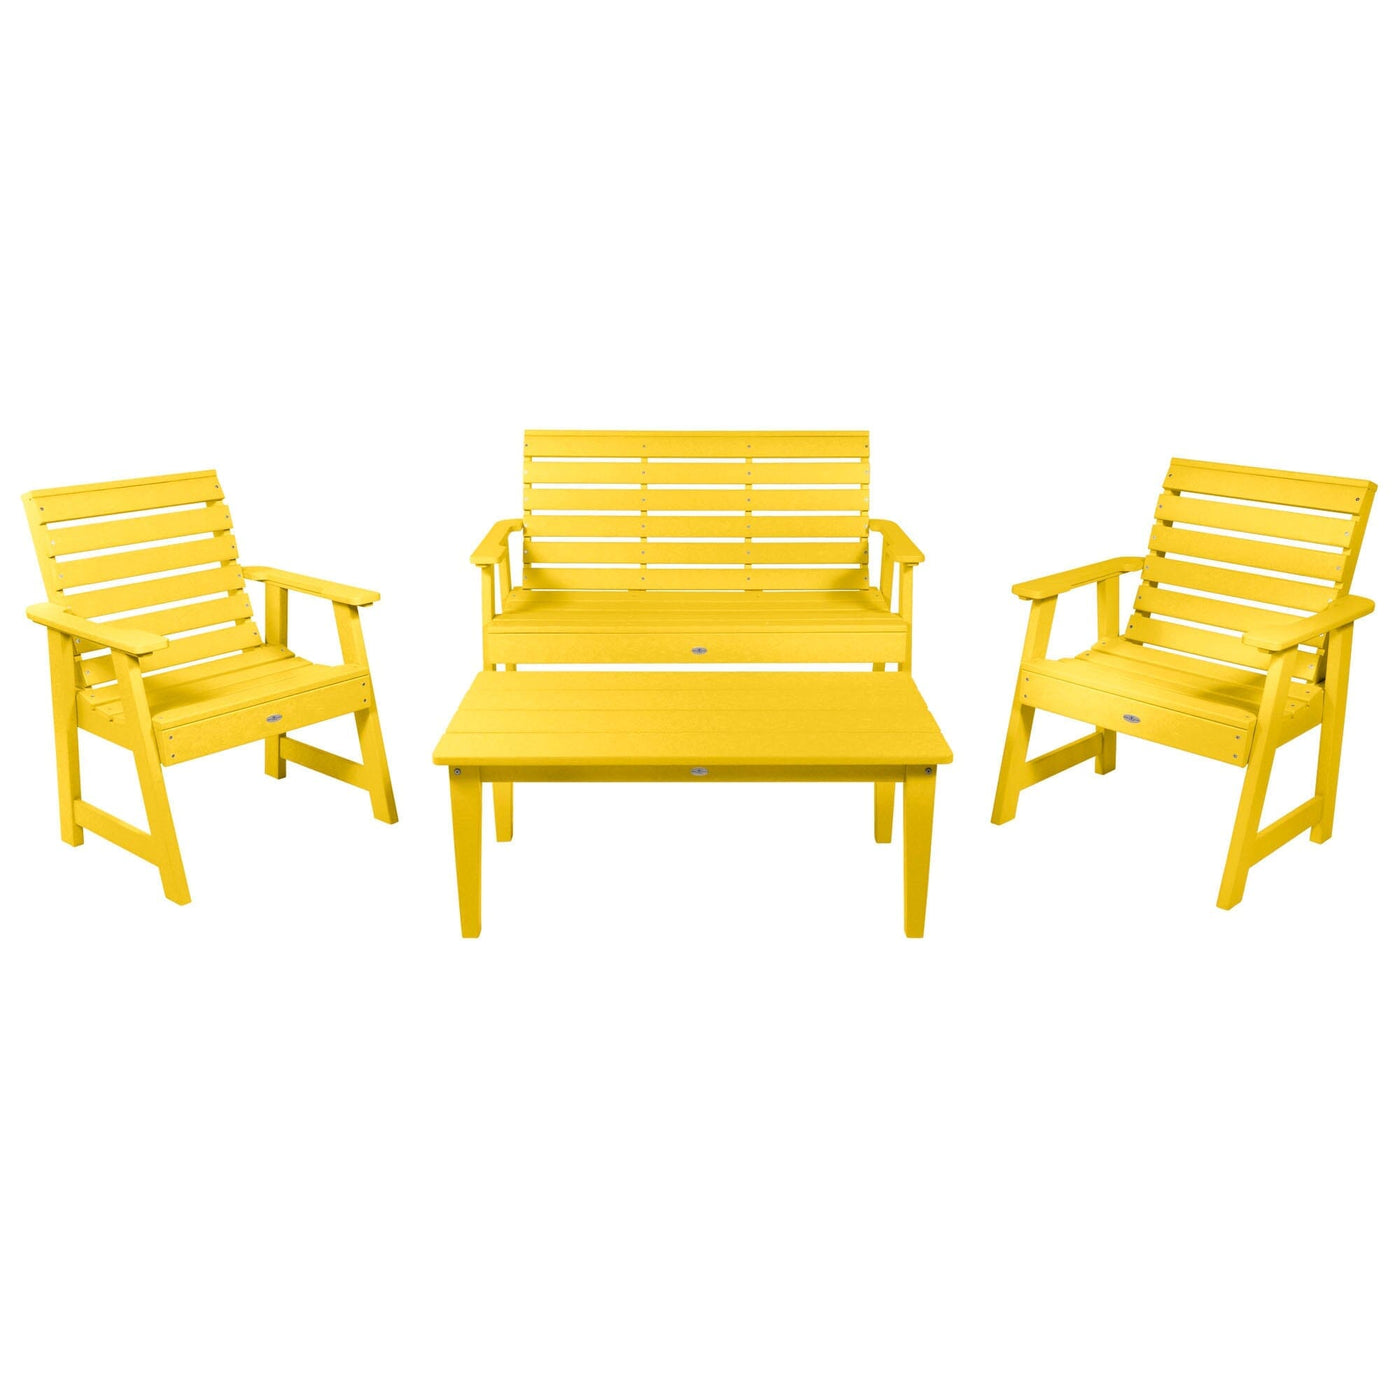 Riverside Garden Bench 4ft, 2 Garden Chairs, and Conversation Table Set Kitted Set Bahia Verde Outdoors Sunbeam Yellow 